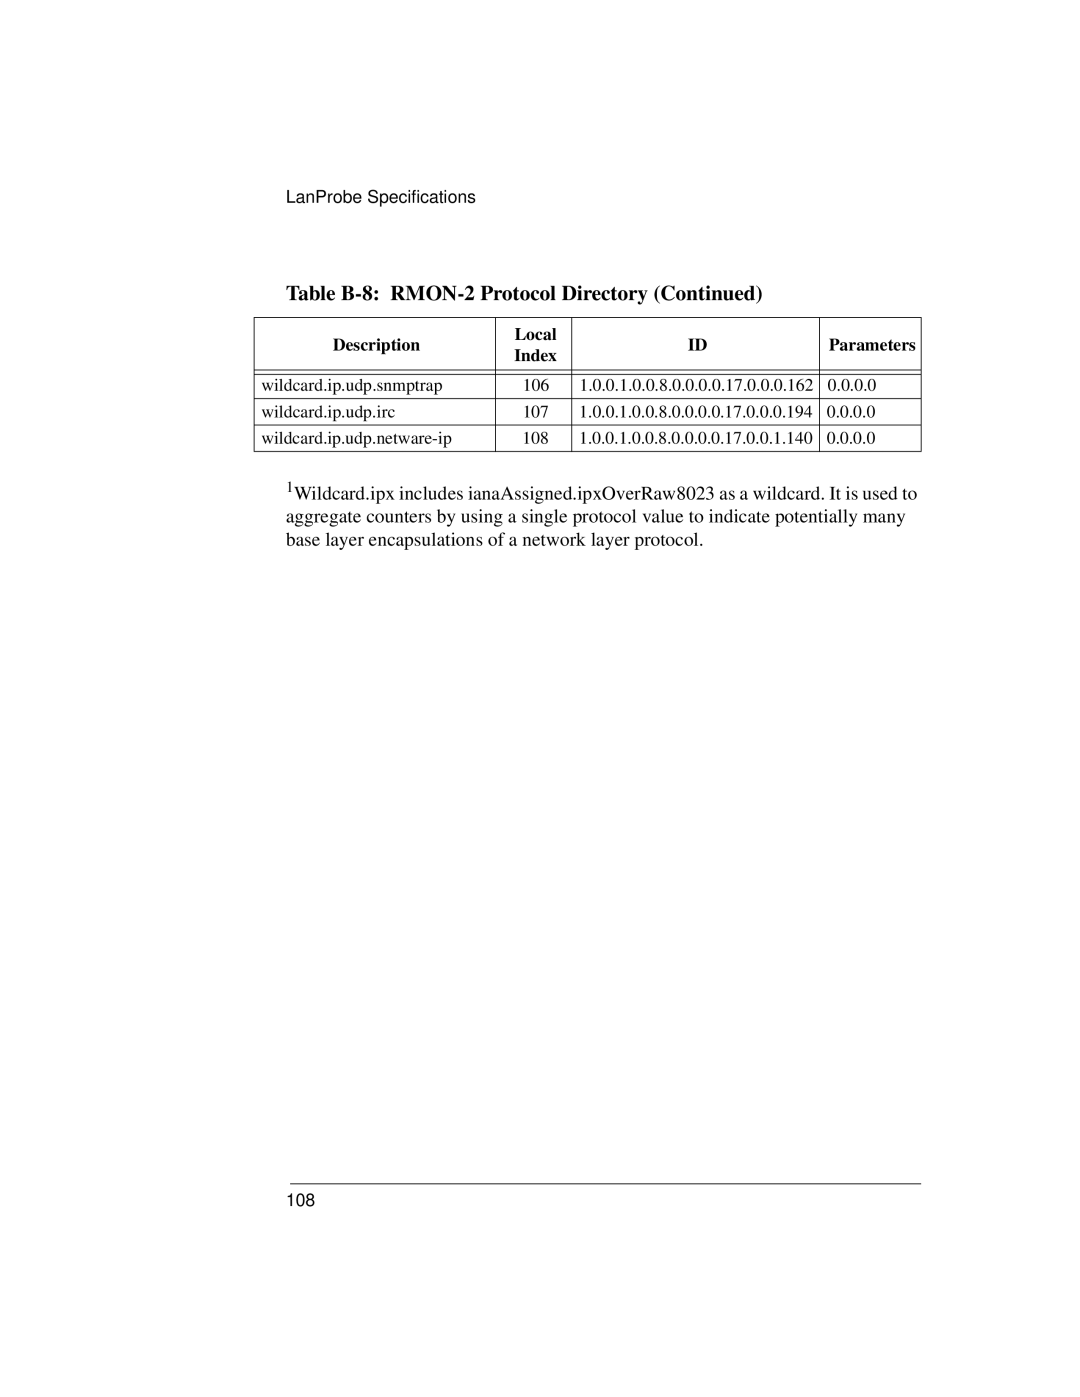 IBM 4986B LanProbe manual Table B-8 RMON-2 Protocol Directory Continued 